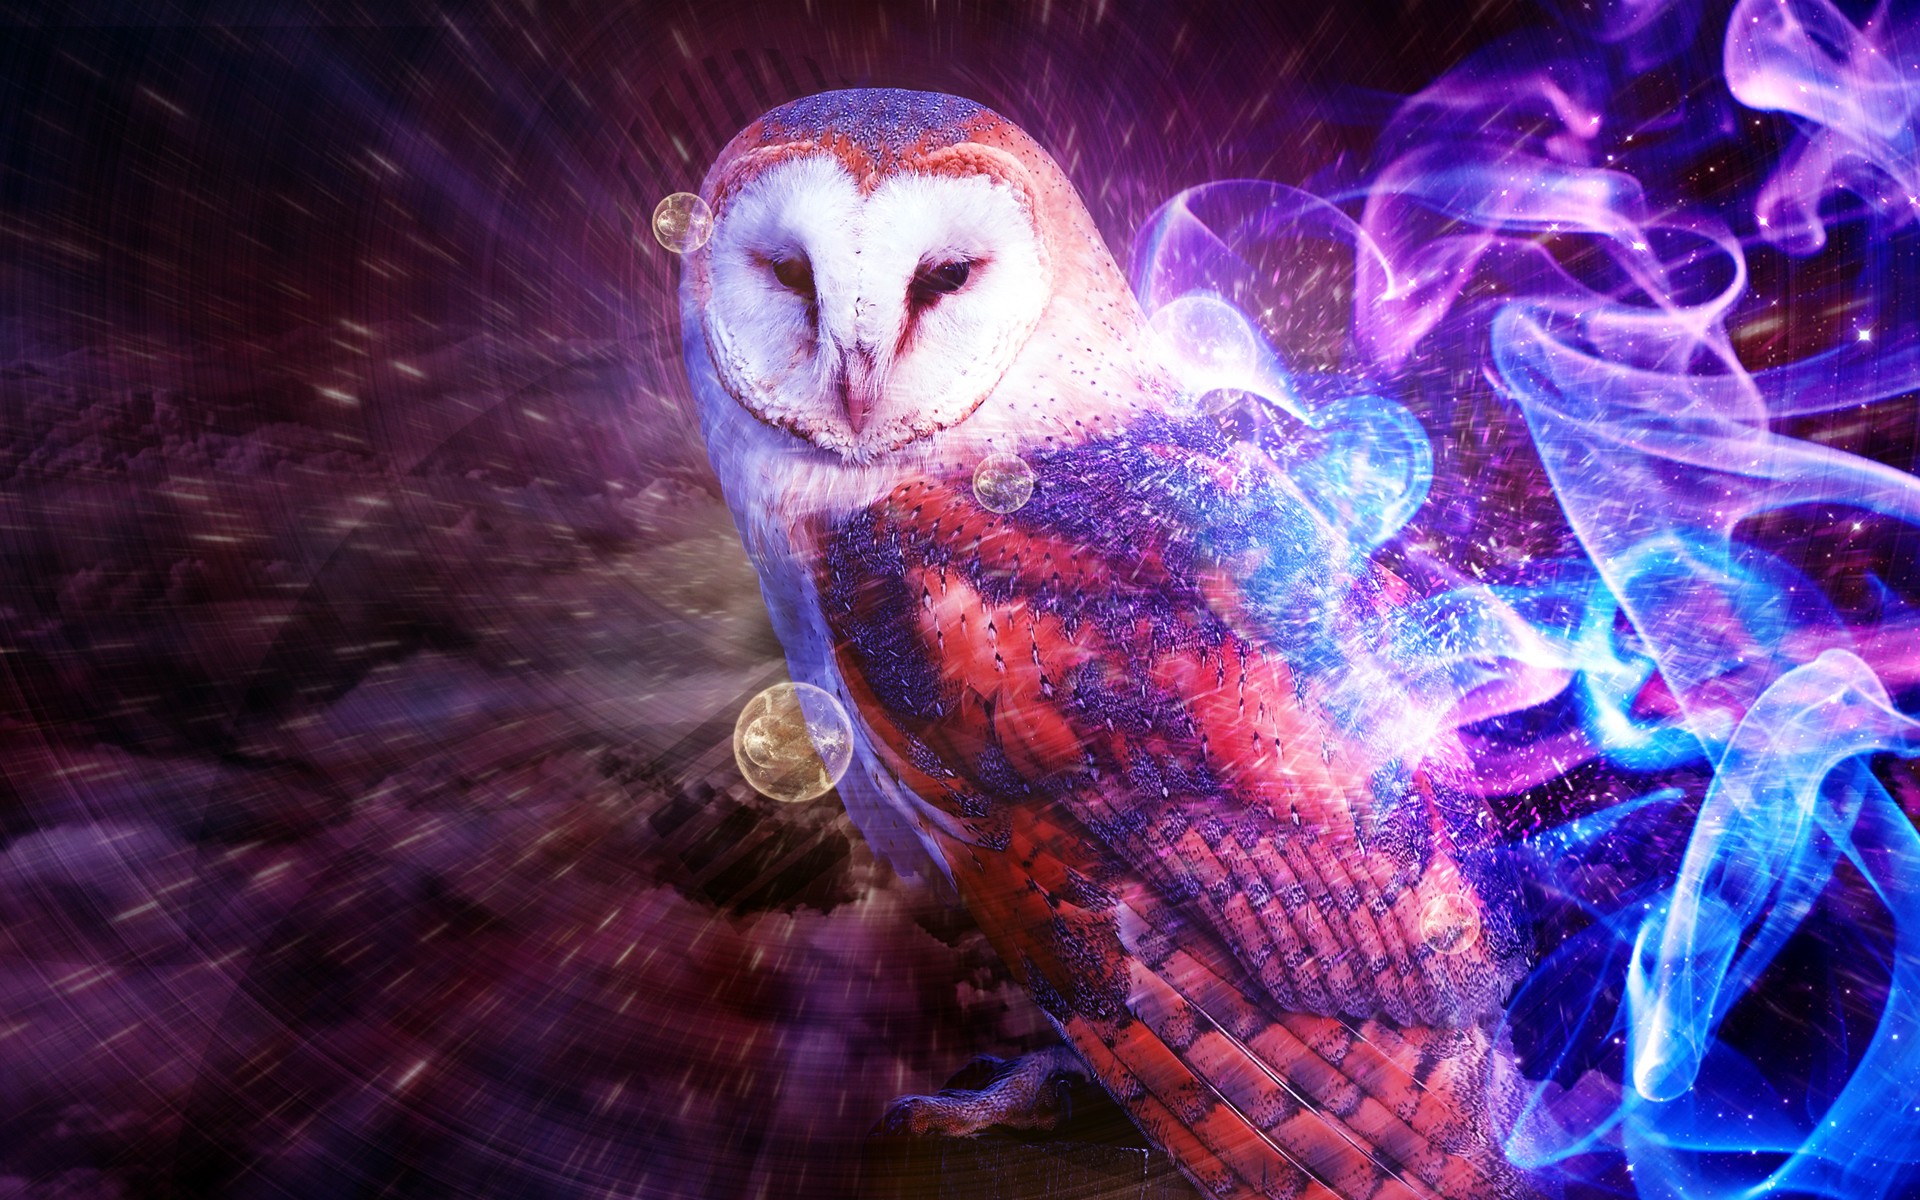 Animal Barn owl HD Wallpaper | Background Image